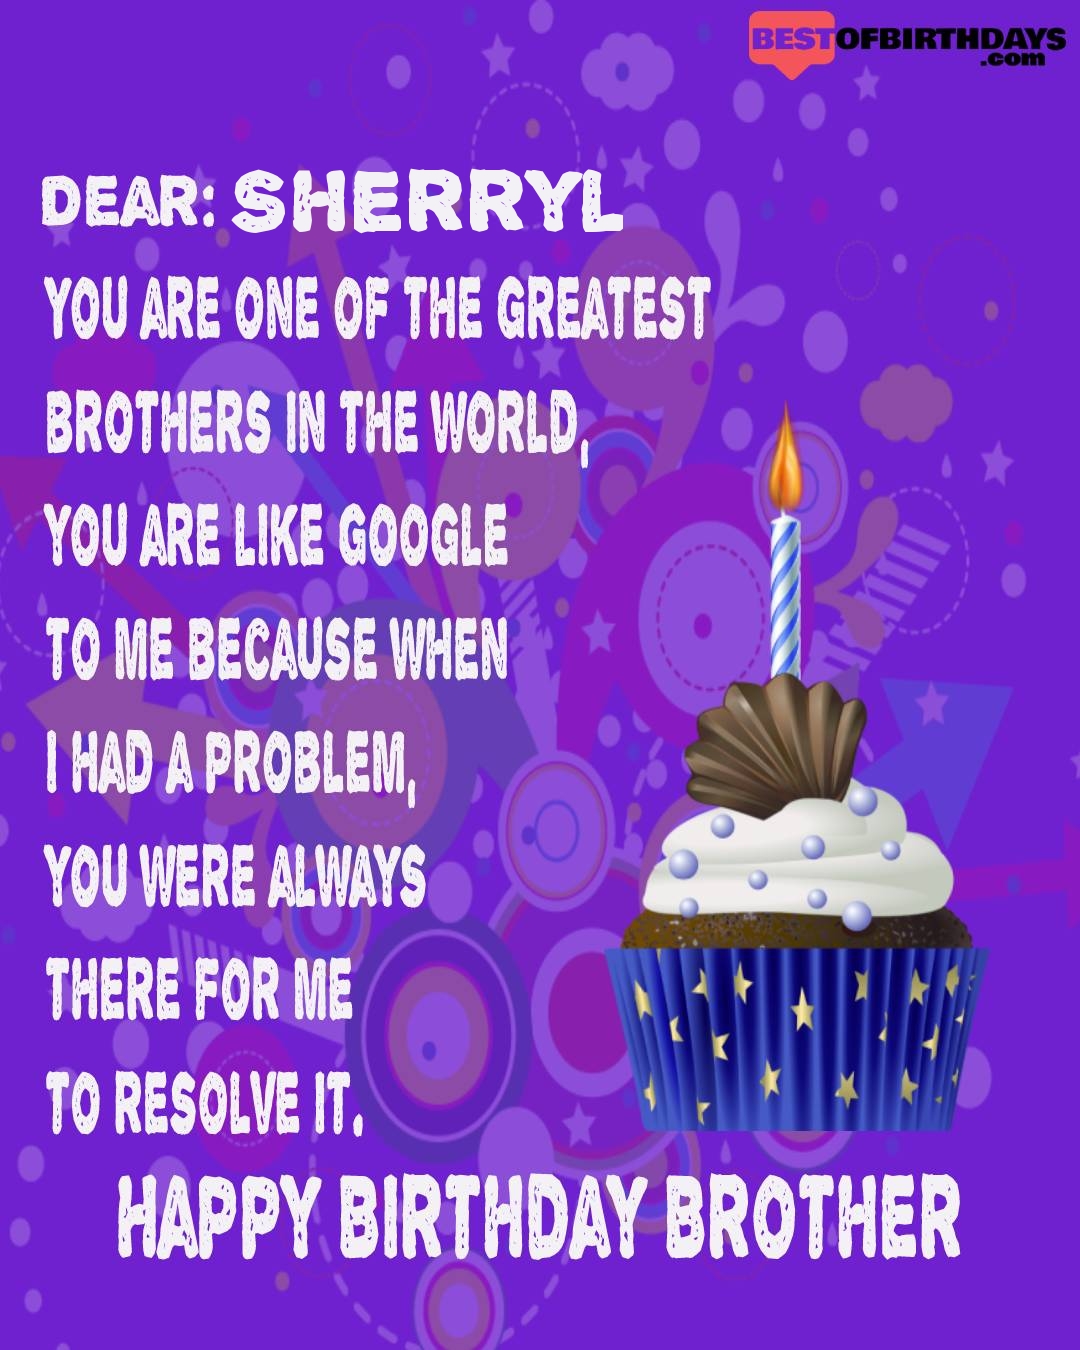 Happy birthday sherryl bhai brother bro